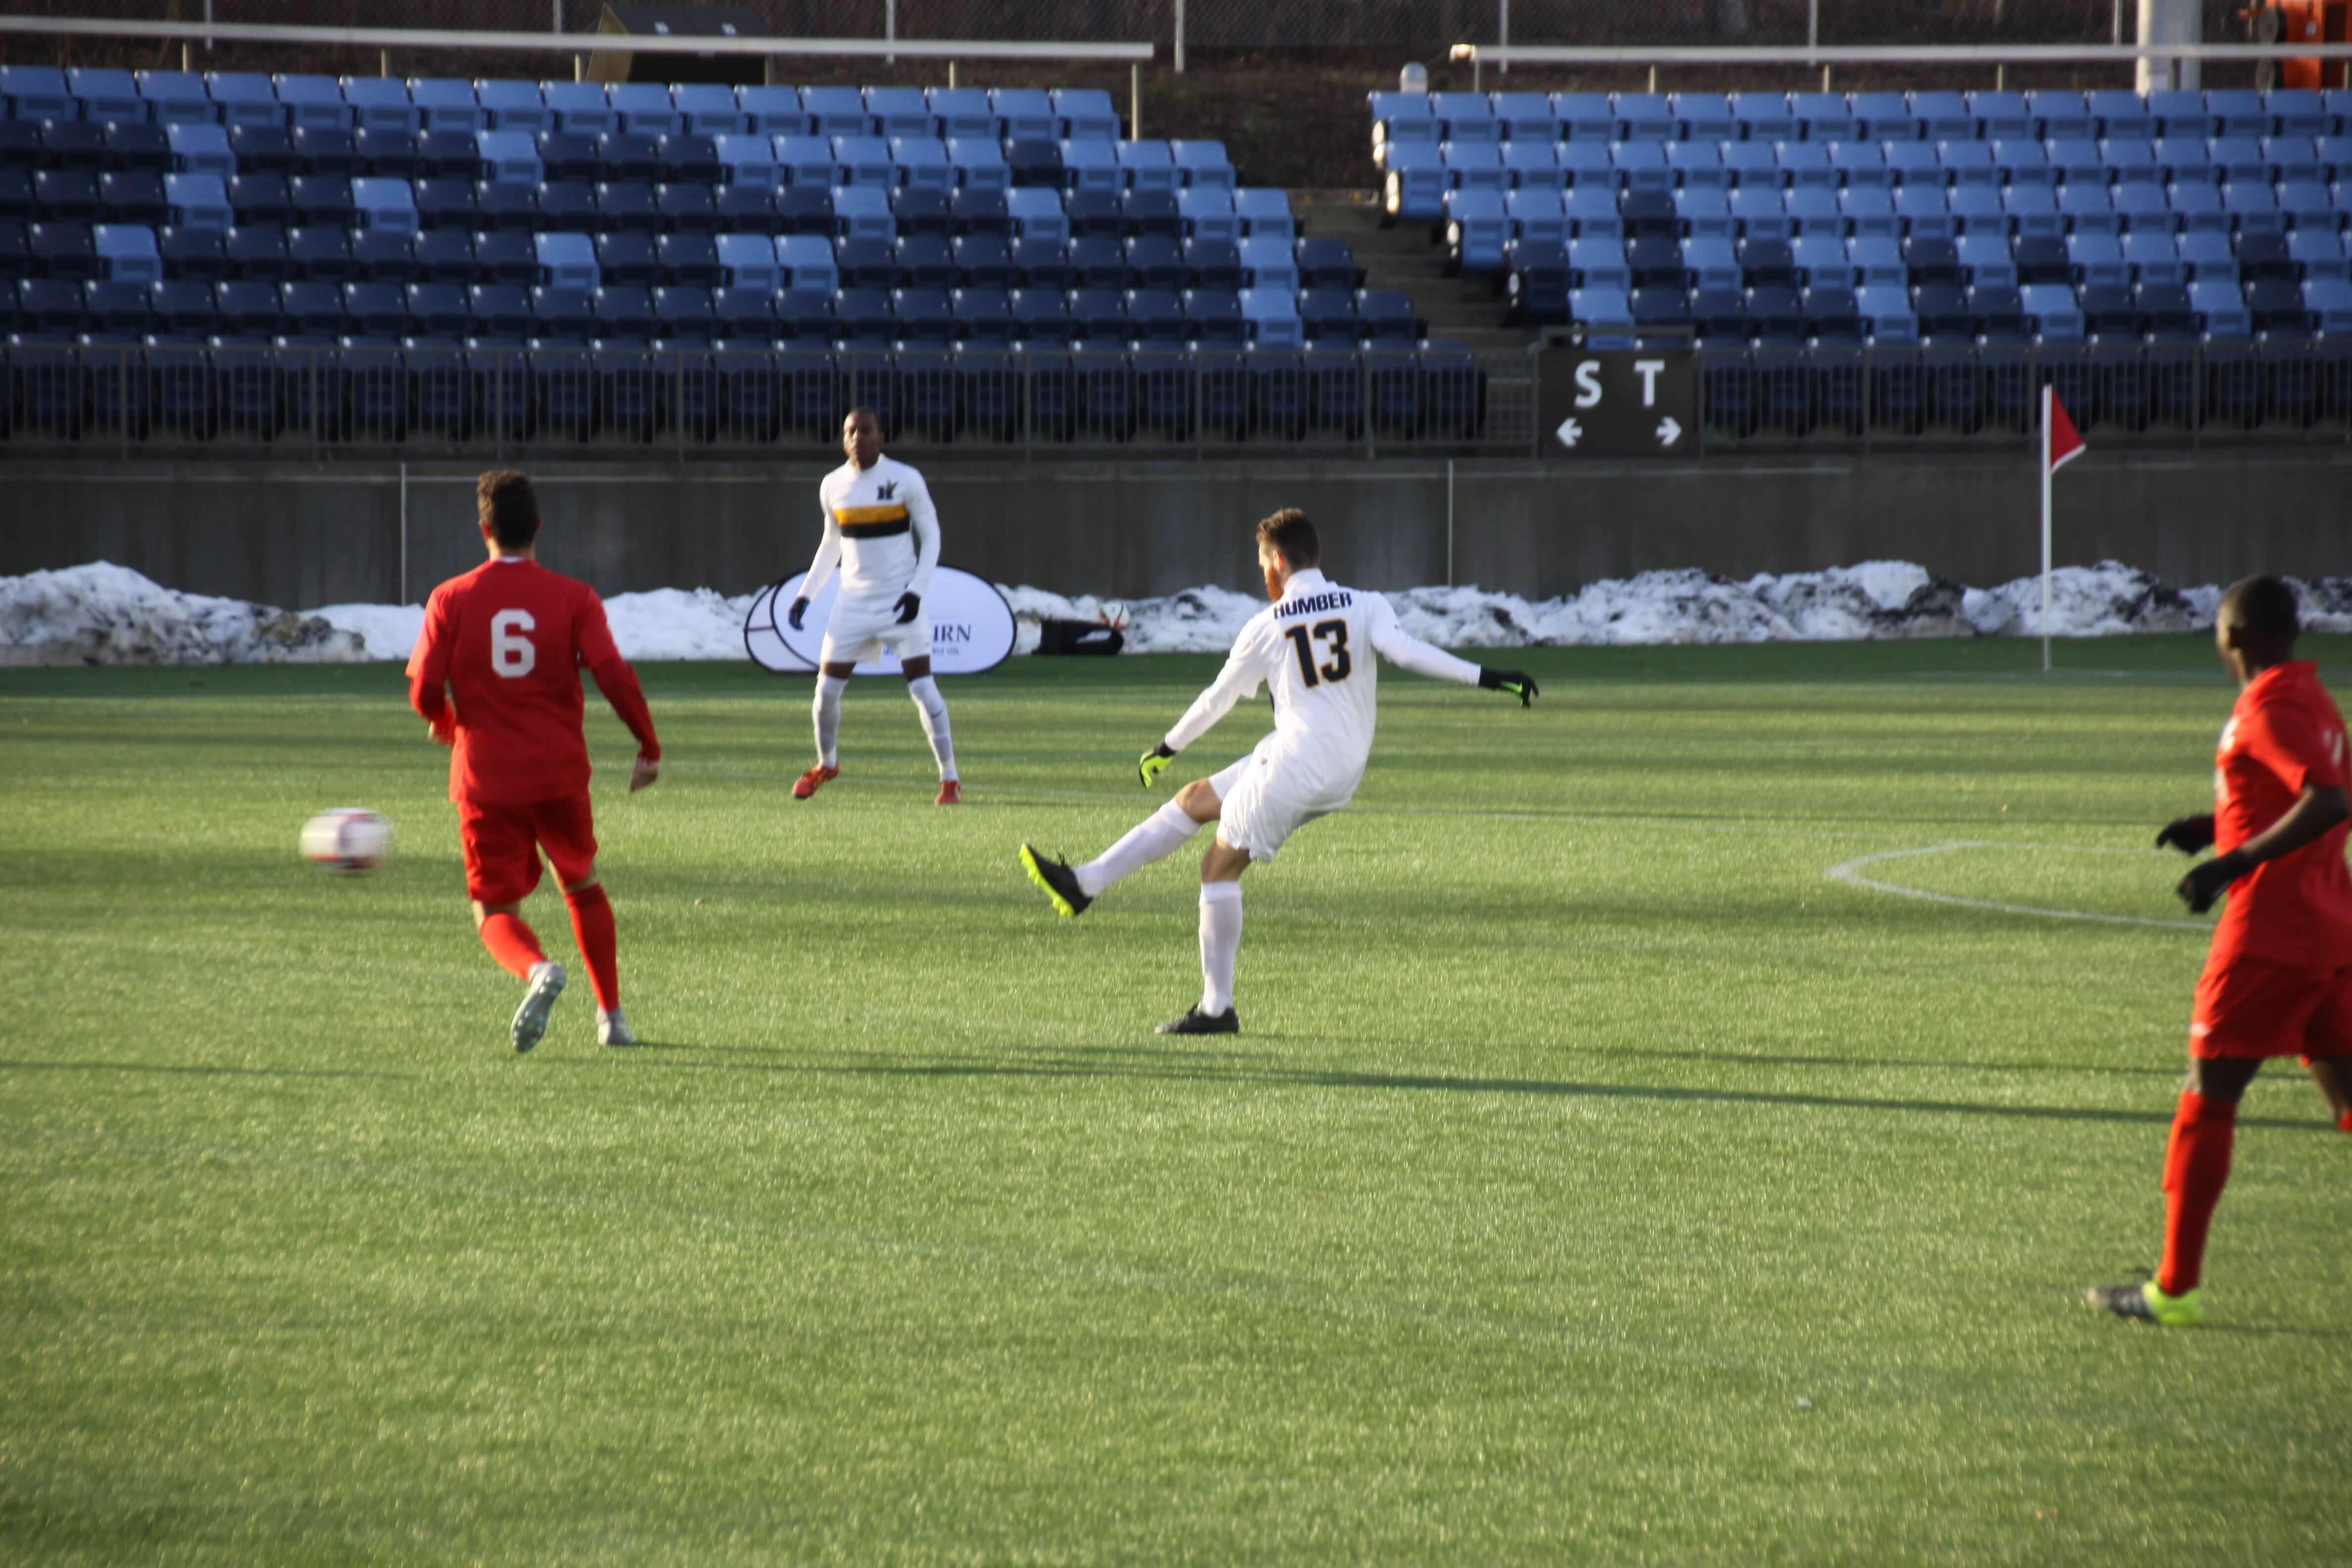 Humber player #13 kicks soccer ball on field